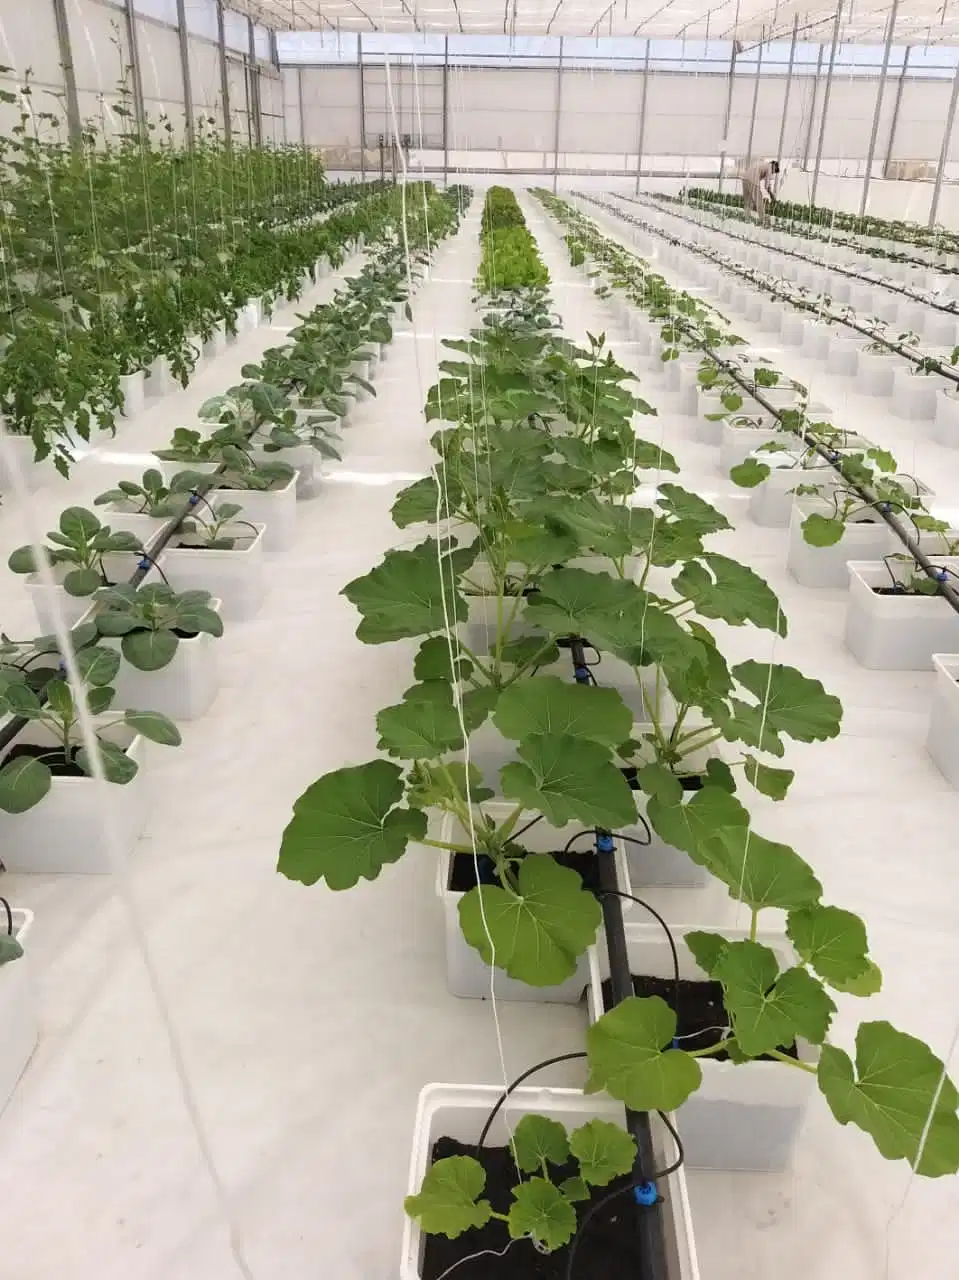 High Quality Greenhouse Plant Dutch Bucket System Dripping Irrigation Dutch Buckets Hydroponics for Vegetable Grow